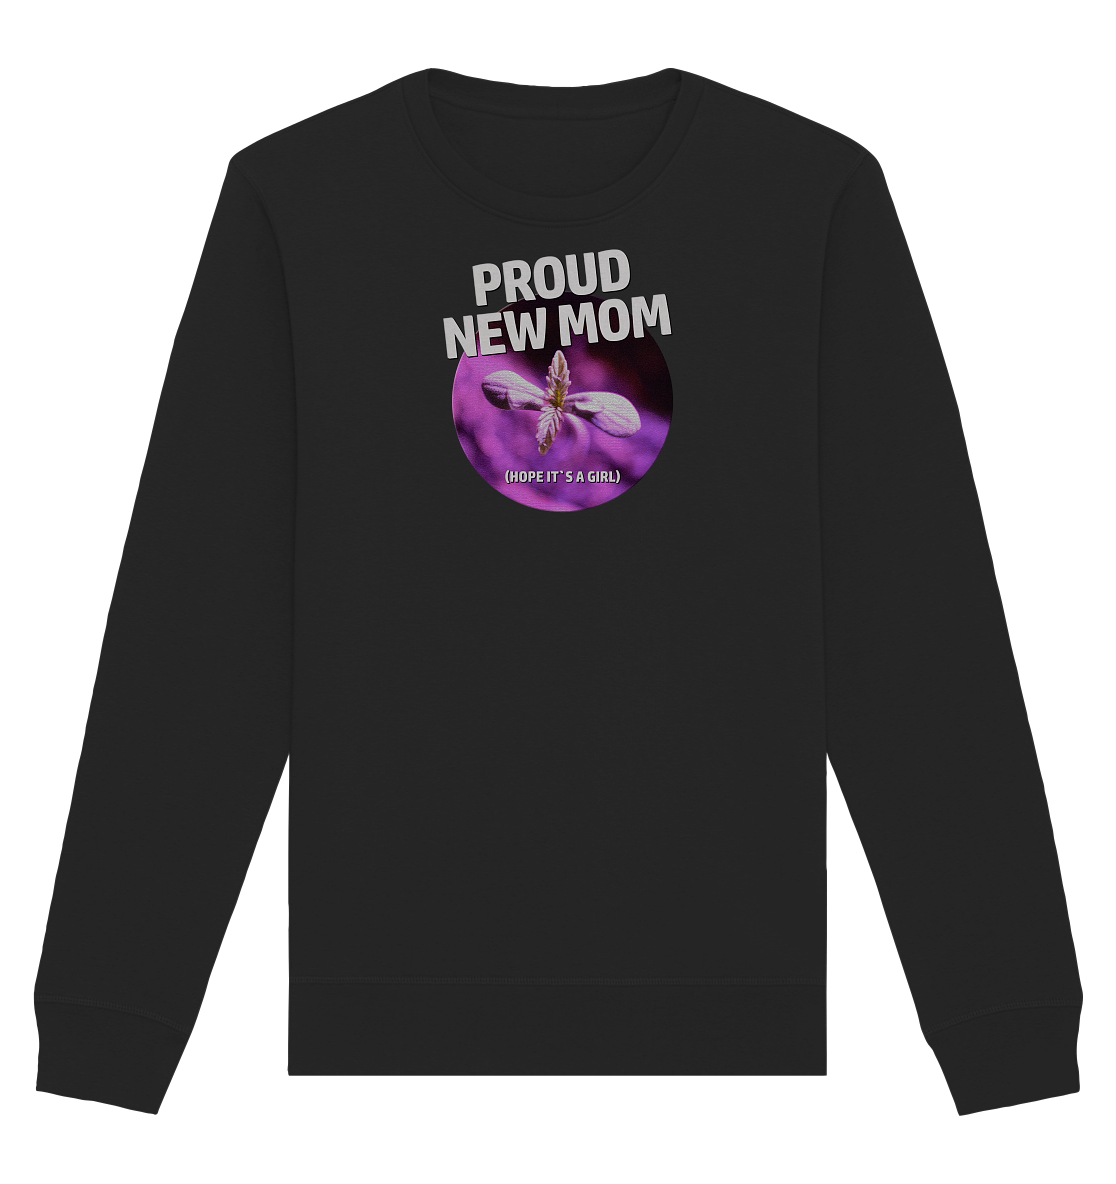 Proud new mom - Organic Unisex Sweatshirt